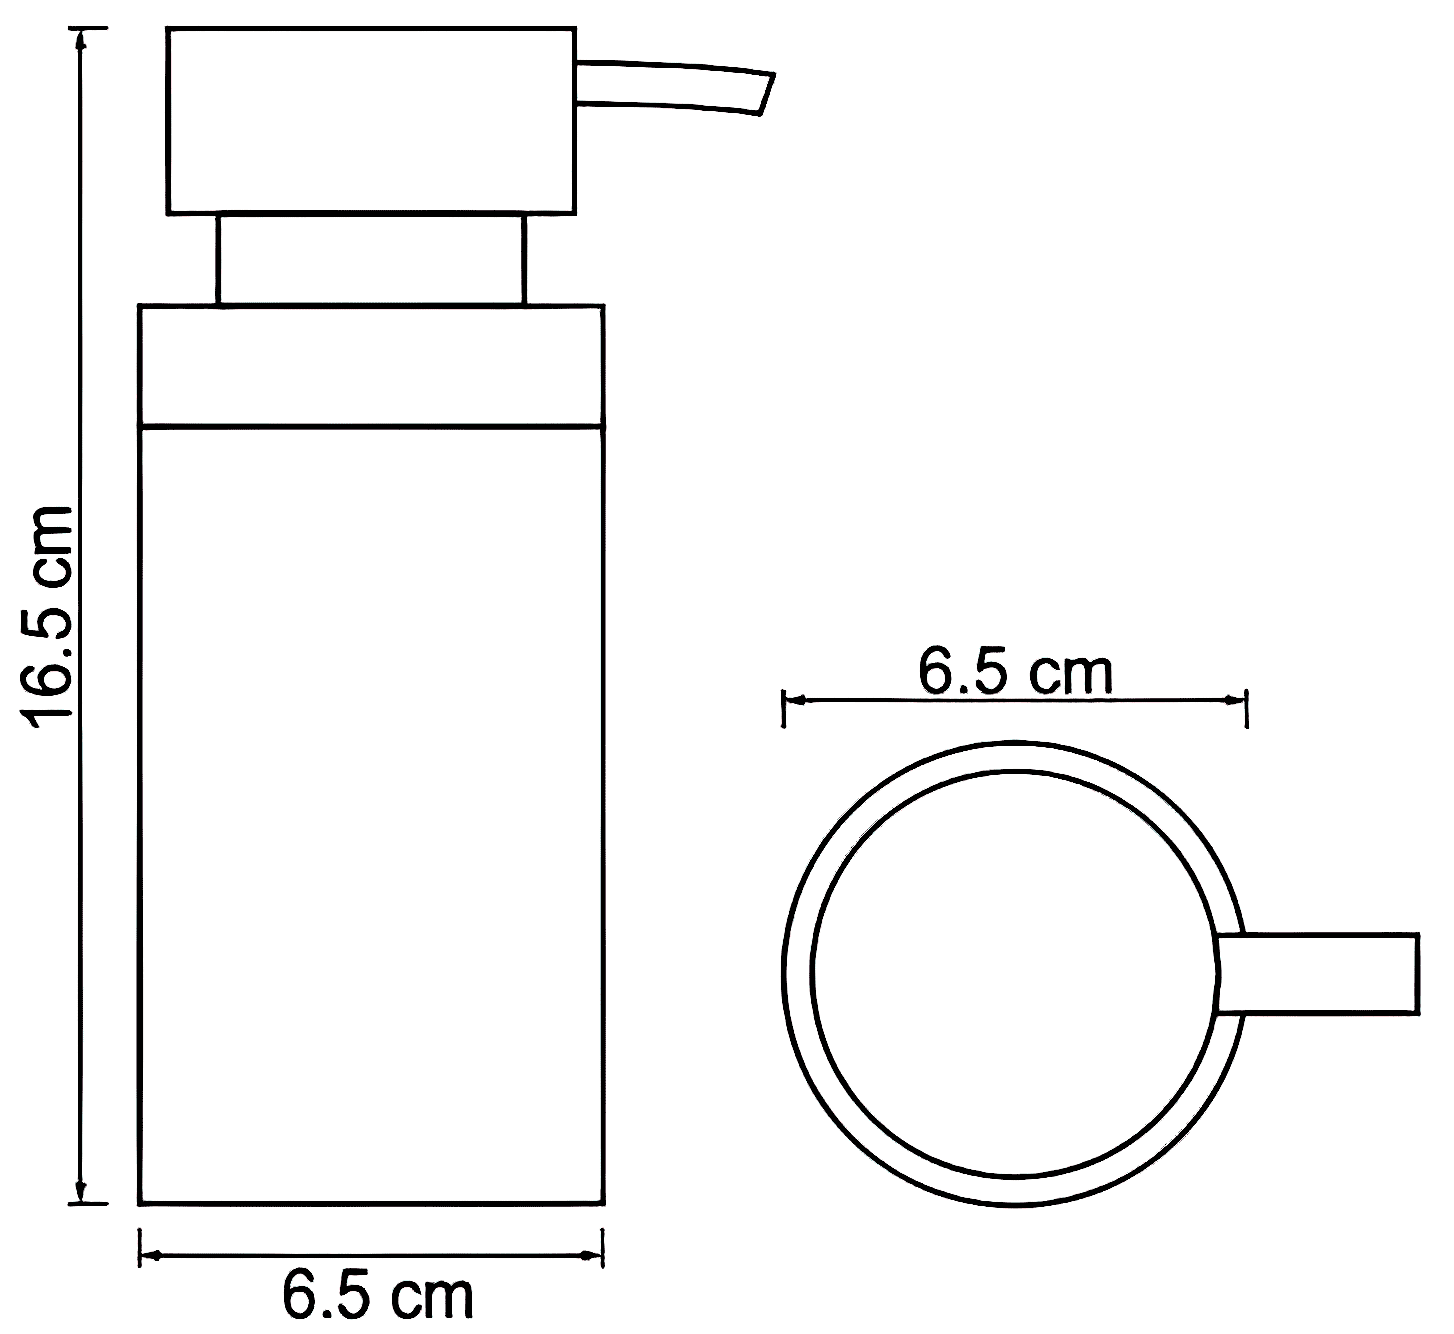 WasserKraft Berkel K-4999 Диспенсер для жидкого мыла настольный (белый)